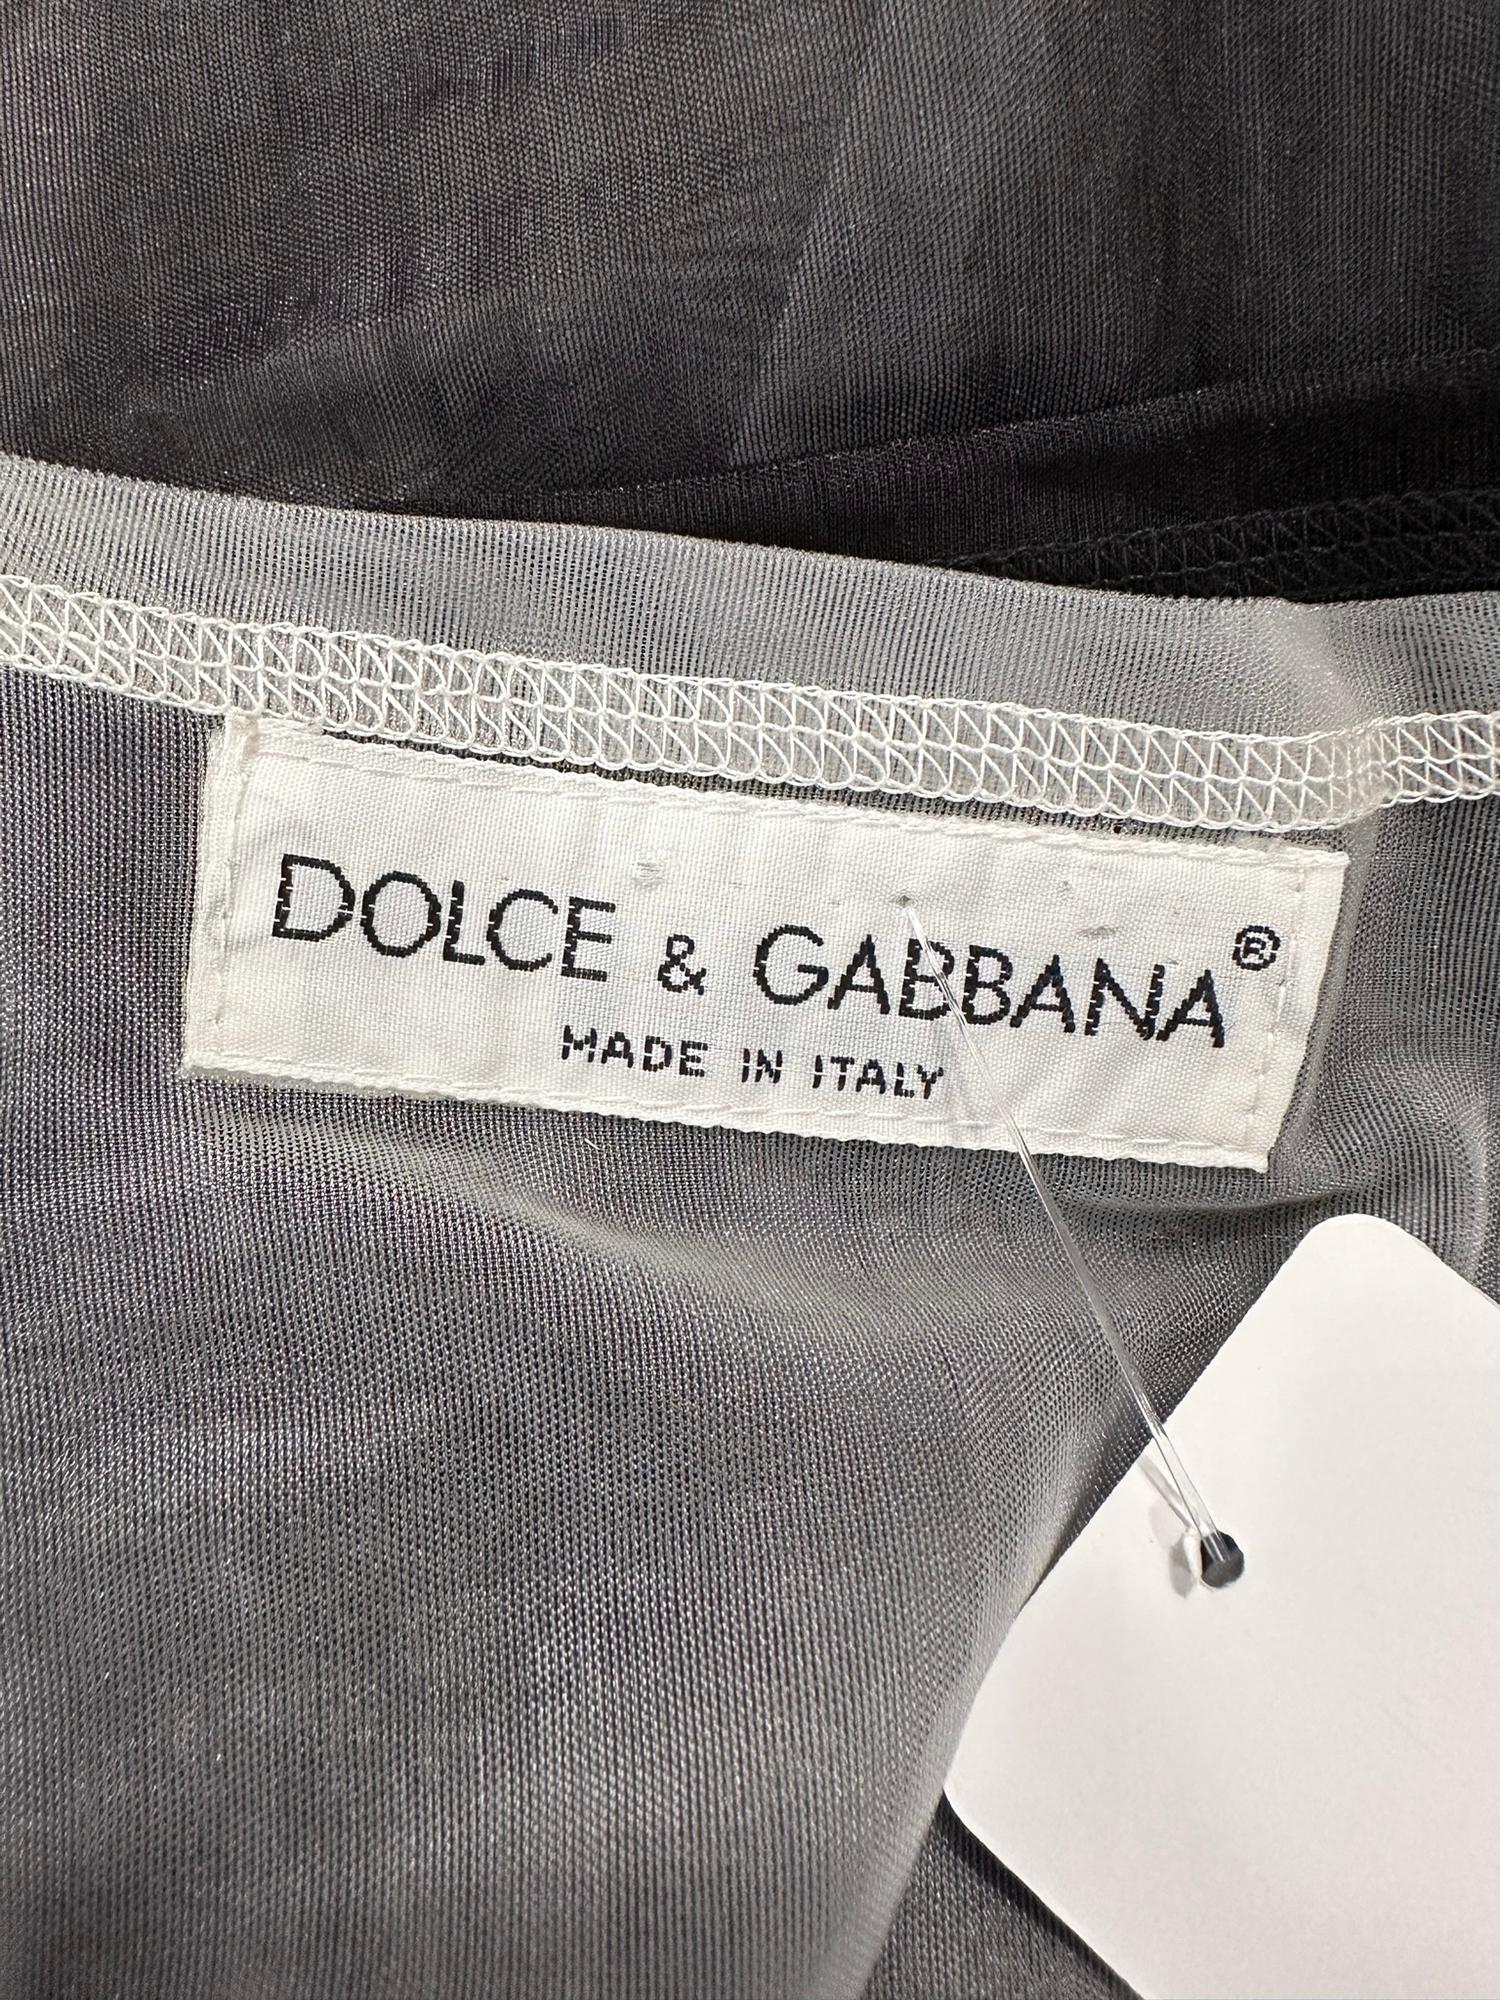 Dolce & Gabbana Sheer Black & White Nylon Athleisure Over size Top & Maxi Skirt  en vente 10